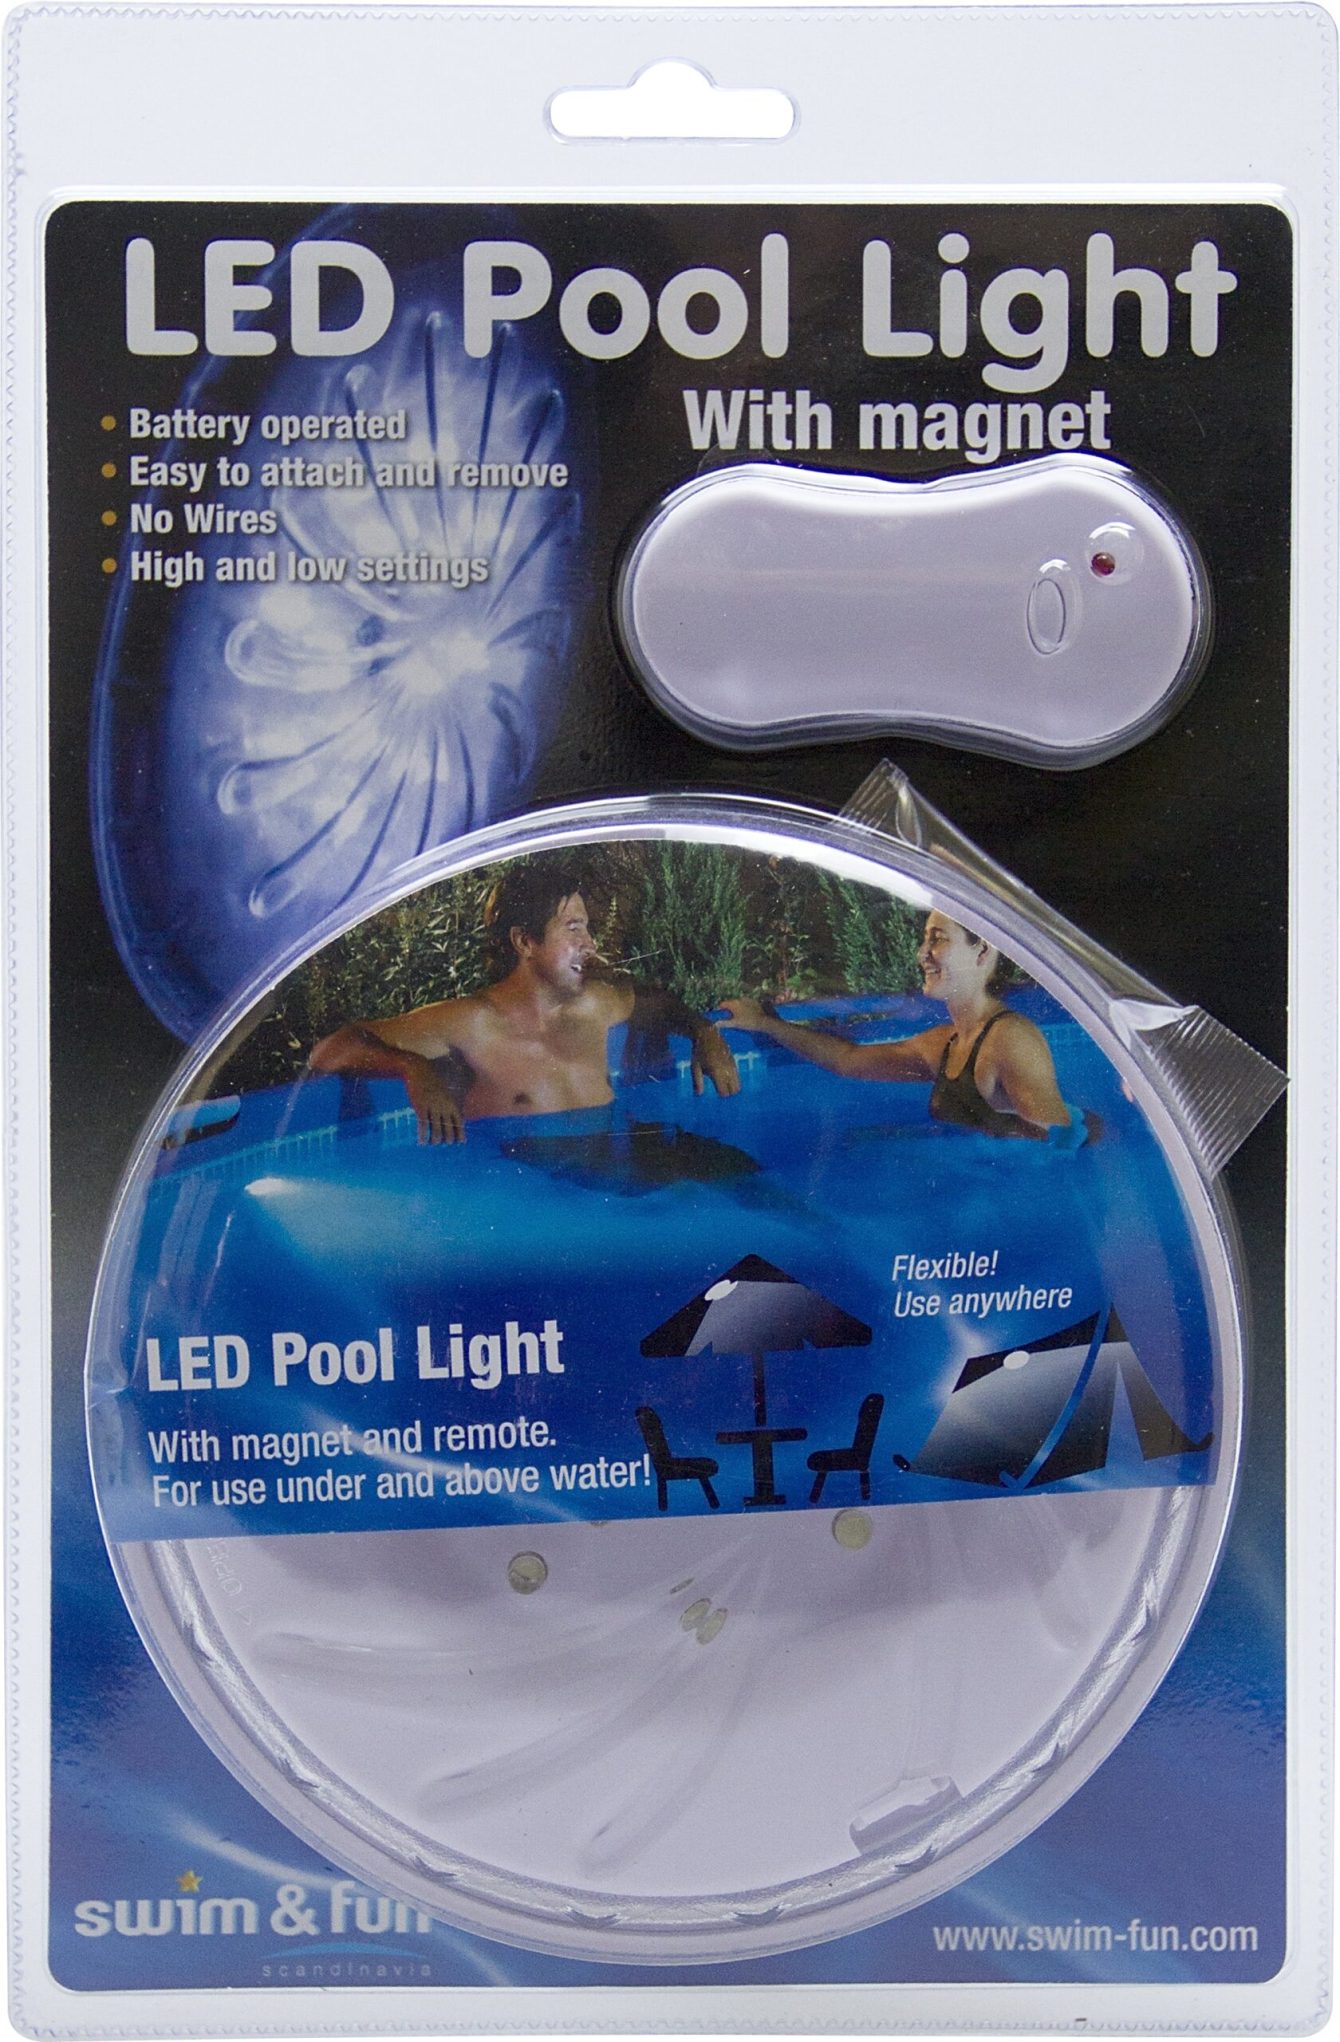 IM-1675-LED-Pool-Light-300